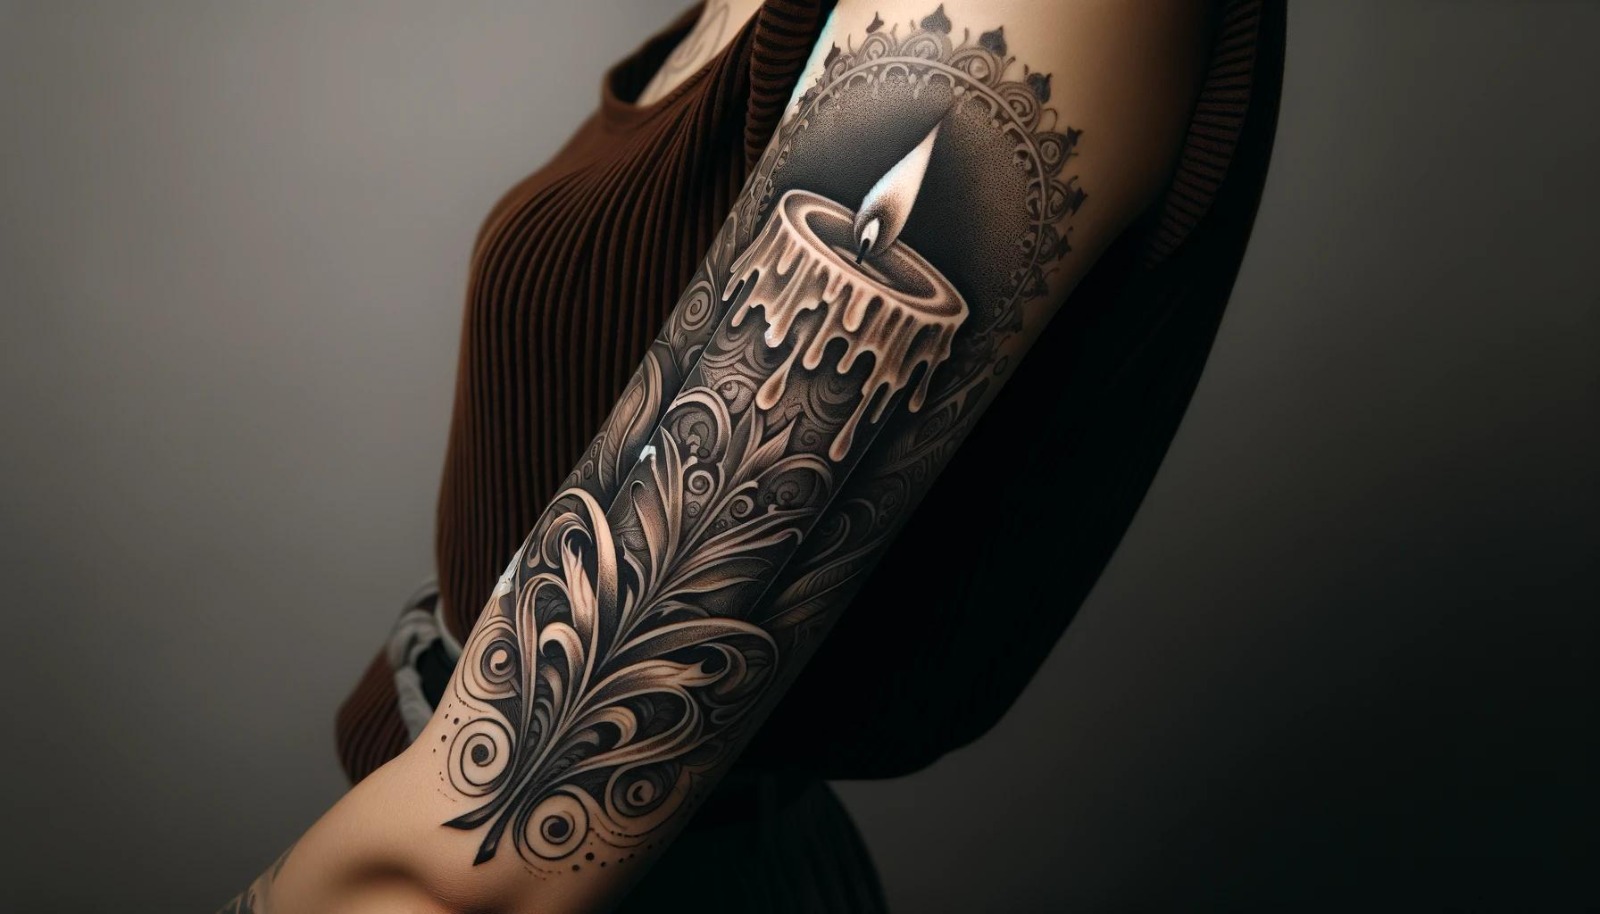 Candle Tattoo Designs: A Symbolic Glow